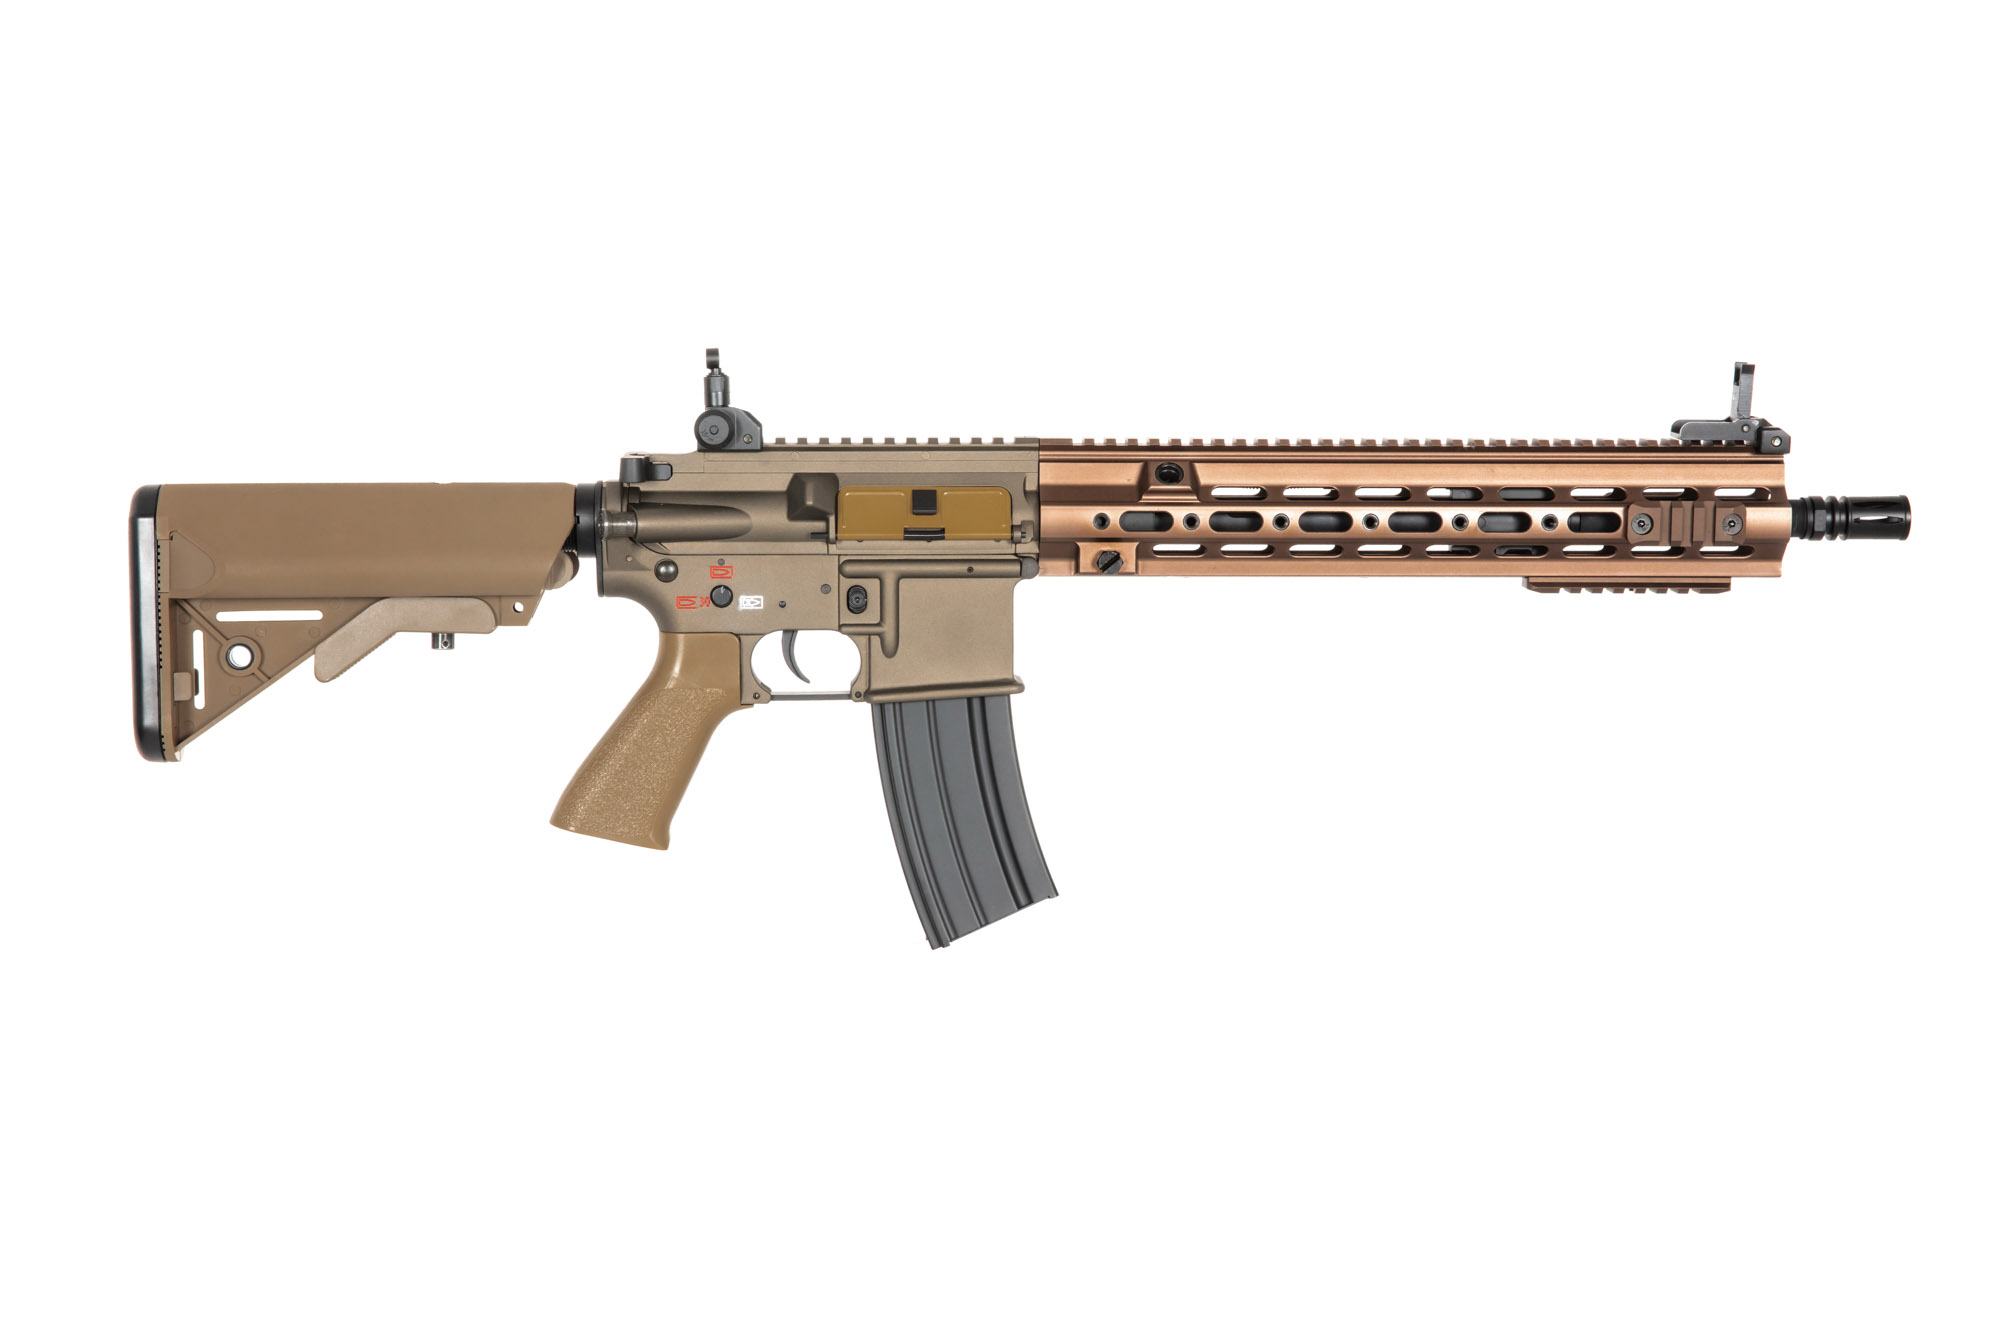 HK416A5 812S Carbine Replica - hellbraun